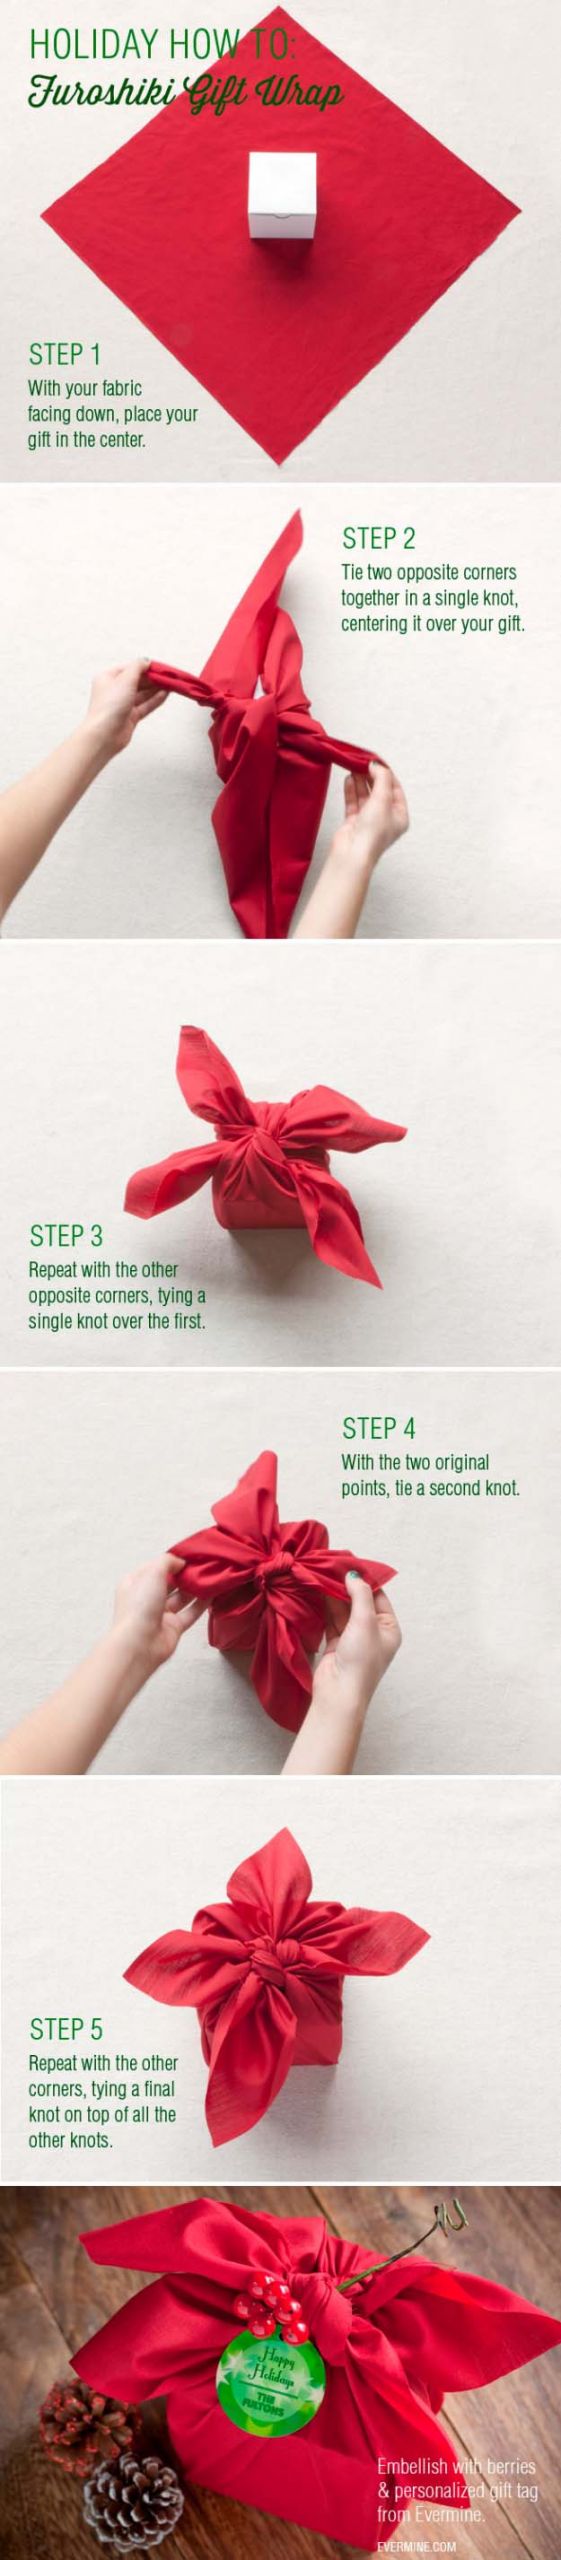 DIY Gift Wrap Ideas
 52 Creative Gift Wrapping Ideas